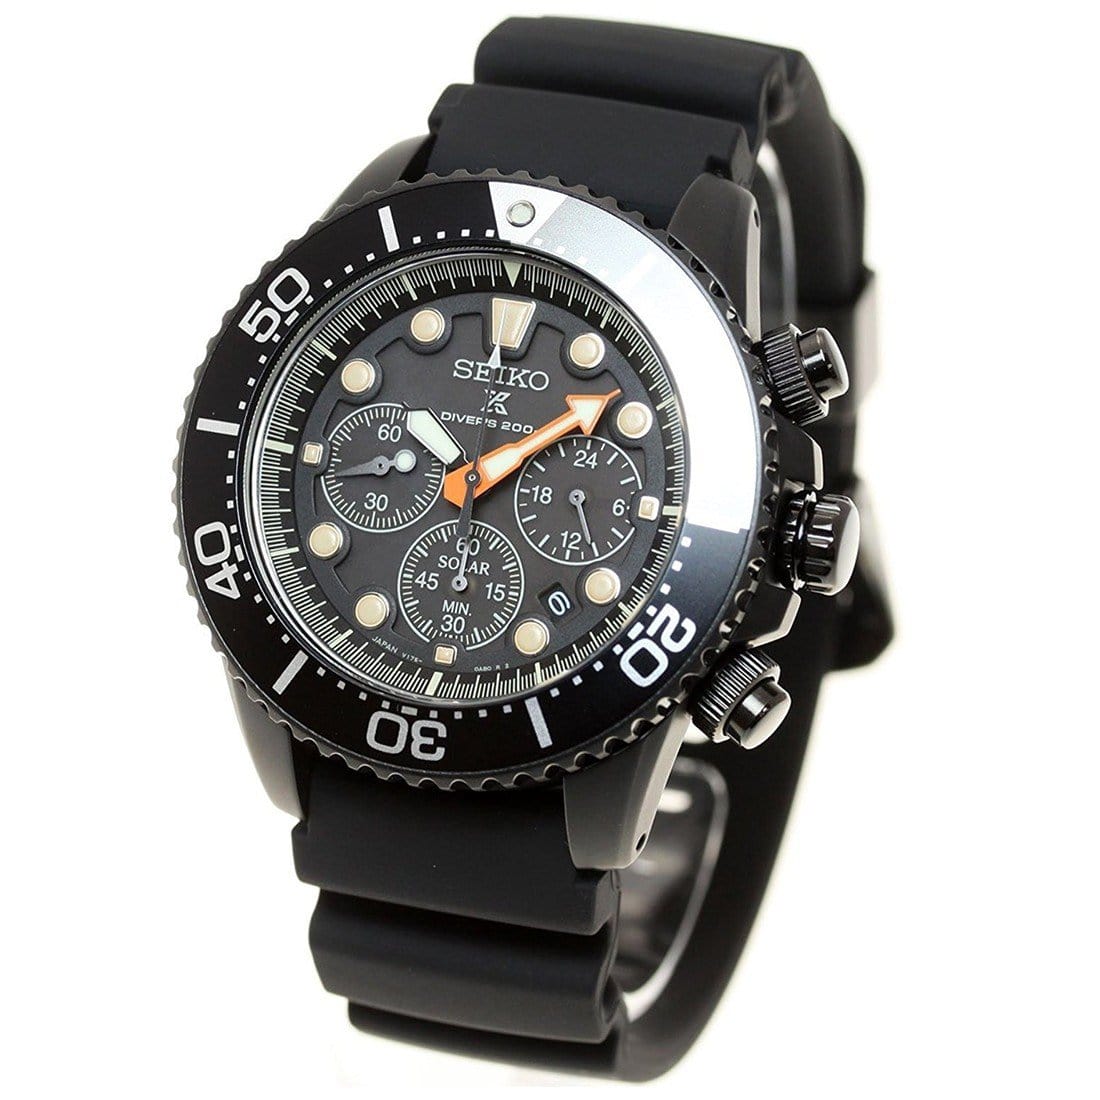 Seiko JDM Prospex SBDL053 Solar Powered Chronograph Male Divers Watch